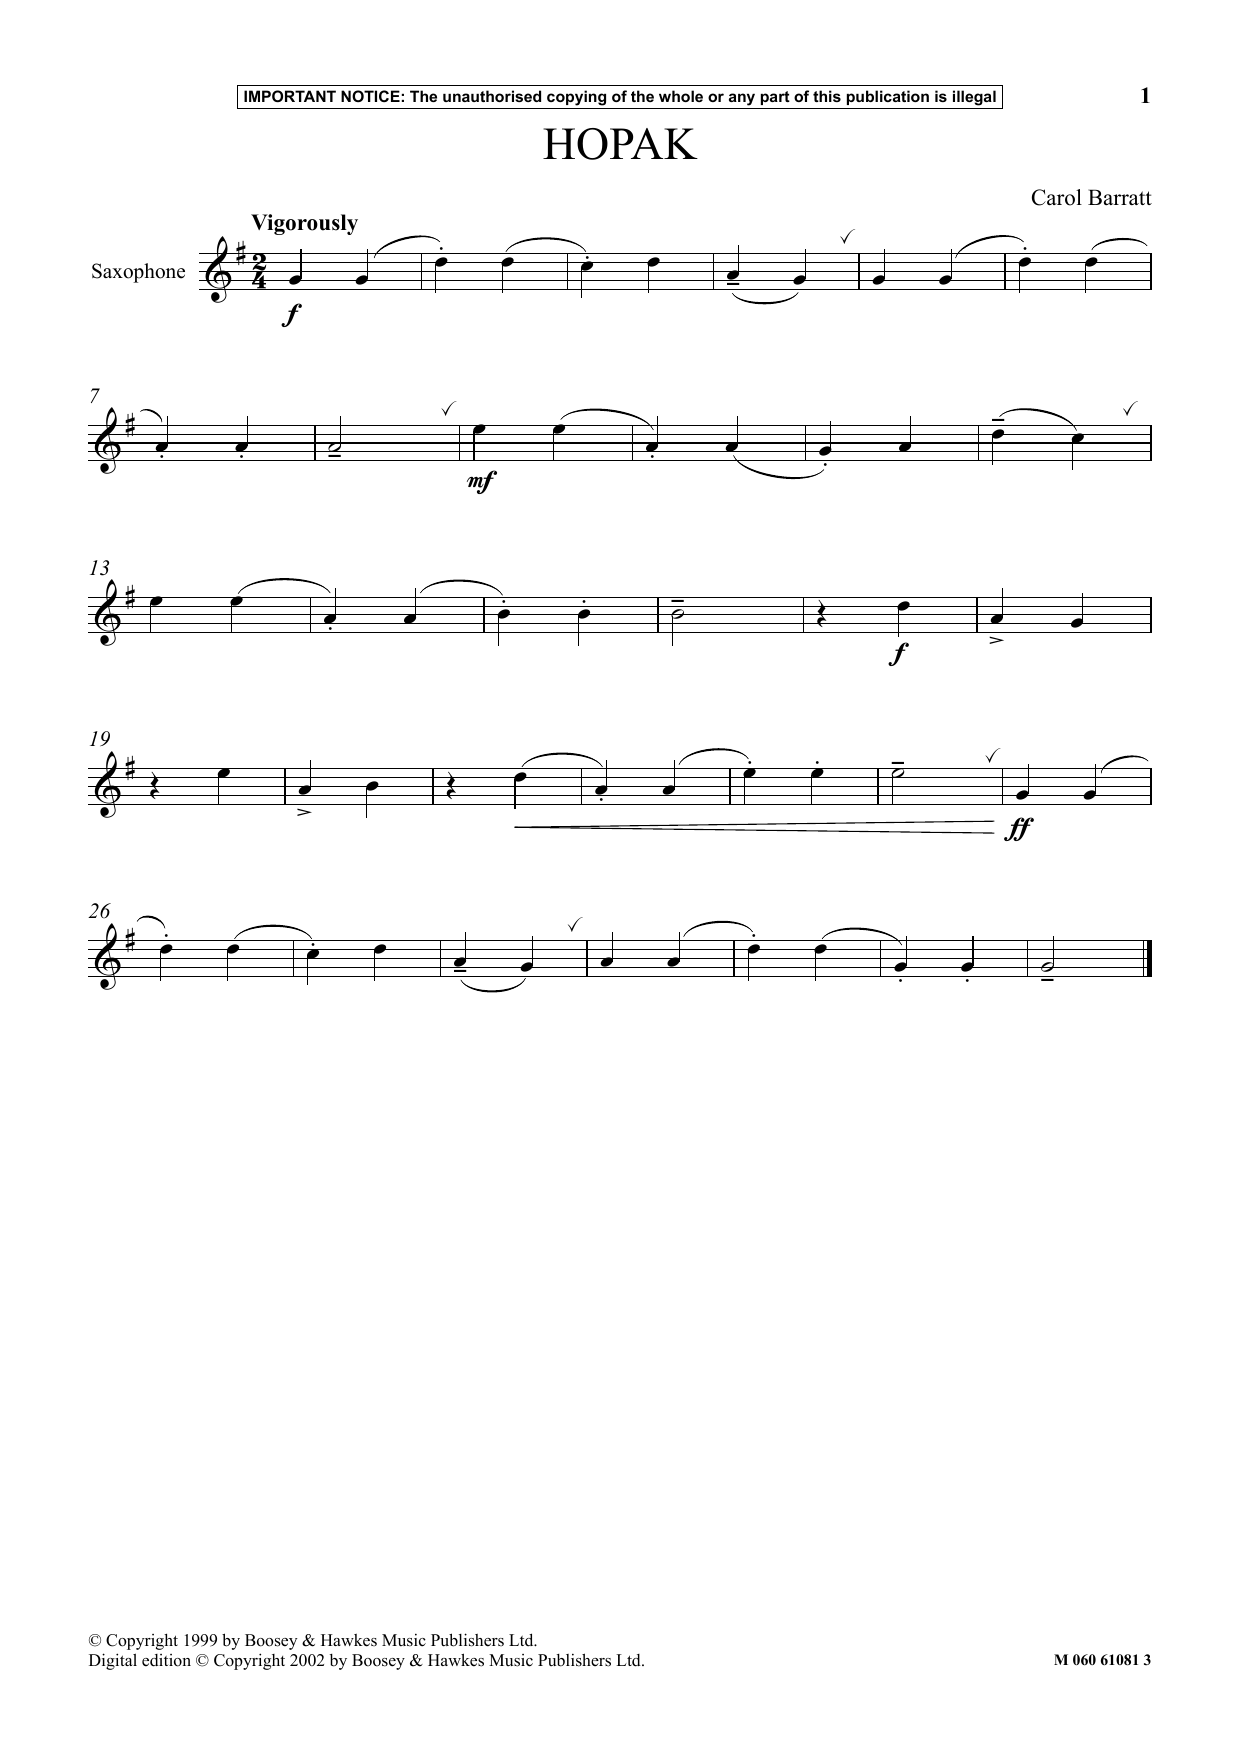 Download Carol Barratt Hopak Sheet Music and learn how to play Instrumental Solo PDF digital score in minutes